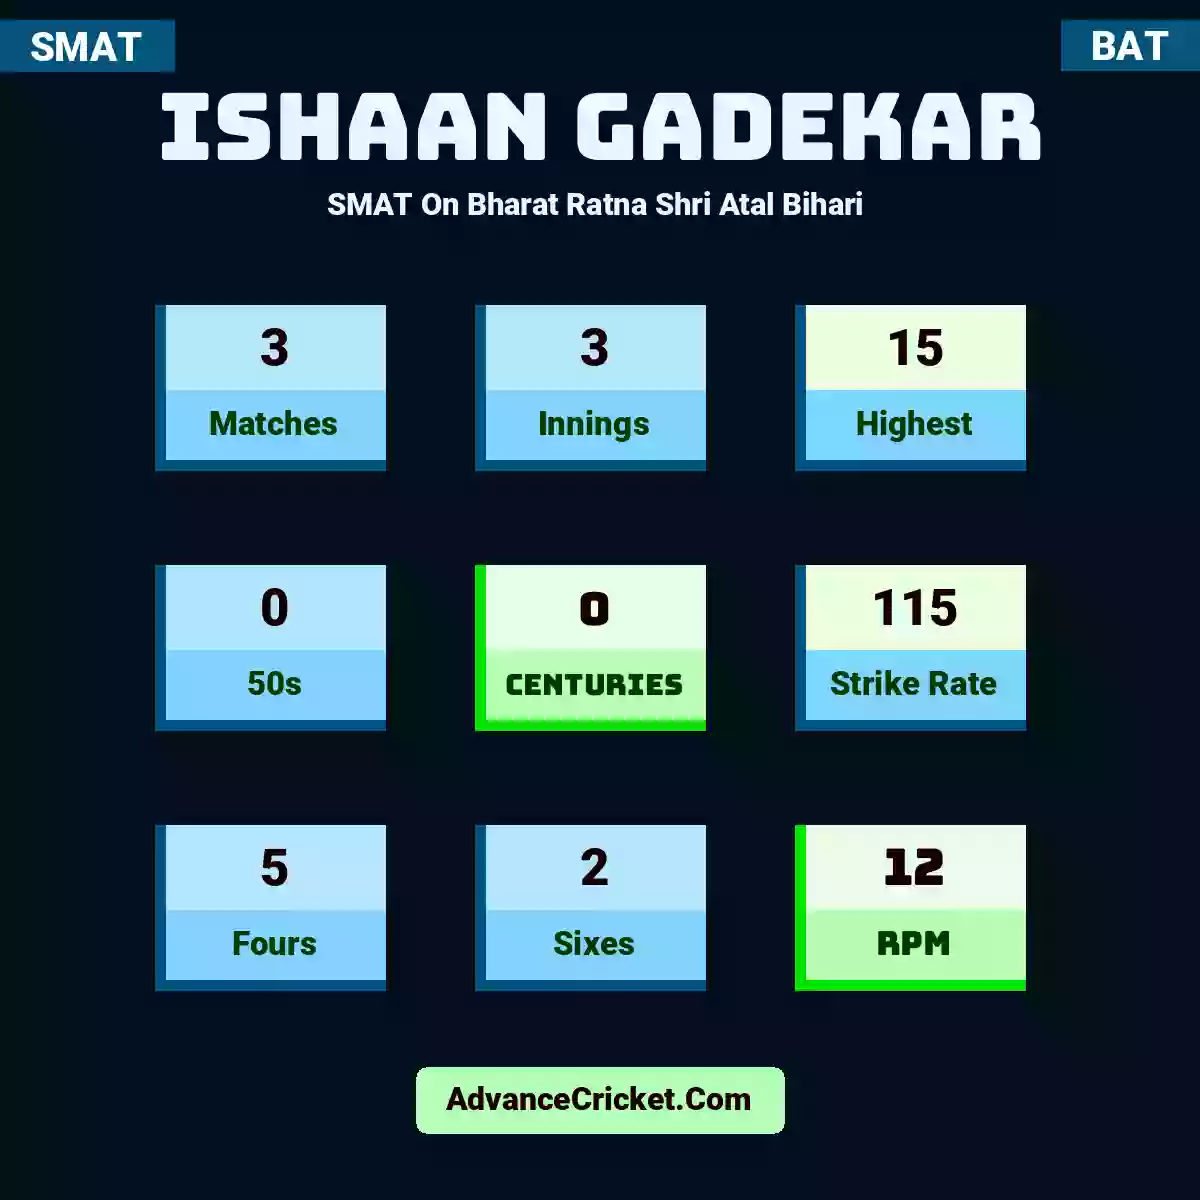 Ishaan Gadekar SMAT  On Bharat Ratna Shri Atal Bihari , Ishaan Gadekar played 3 matches, scored 15 runs as highest, 0 half-centuries, and 0 centuries, with a strike rate of 115. I.Gadekar hit 5 fours and 2 sixes, with an RPM of 12.